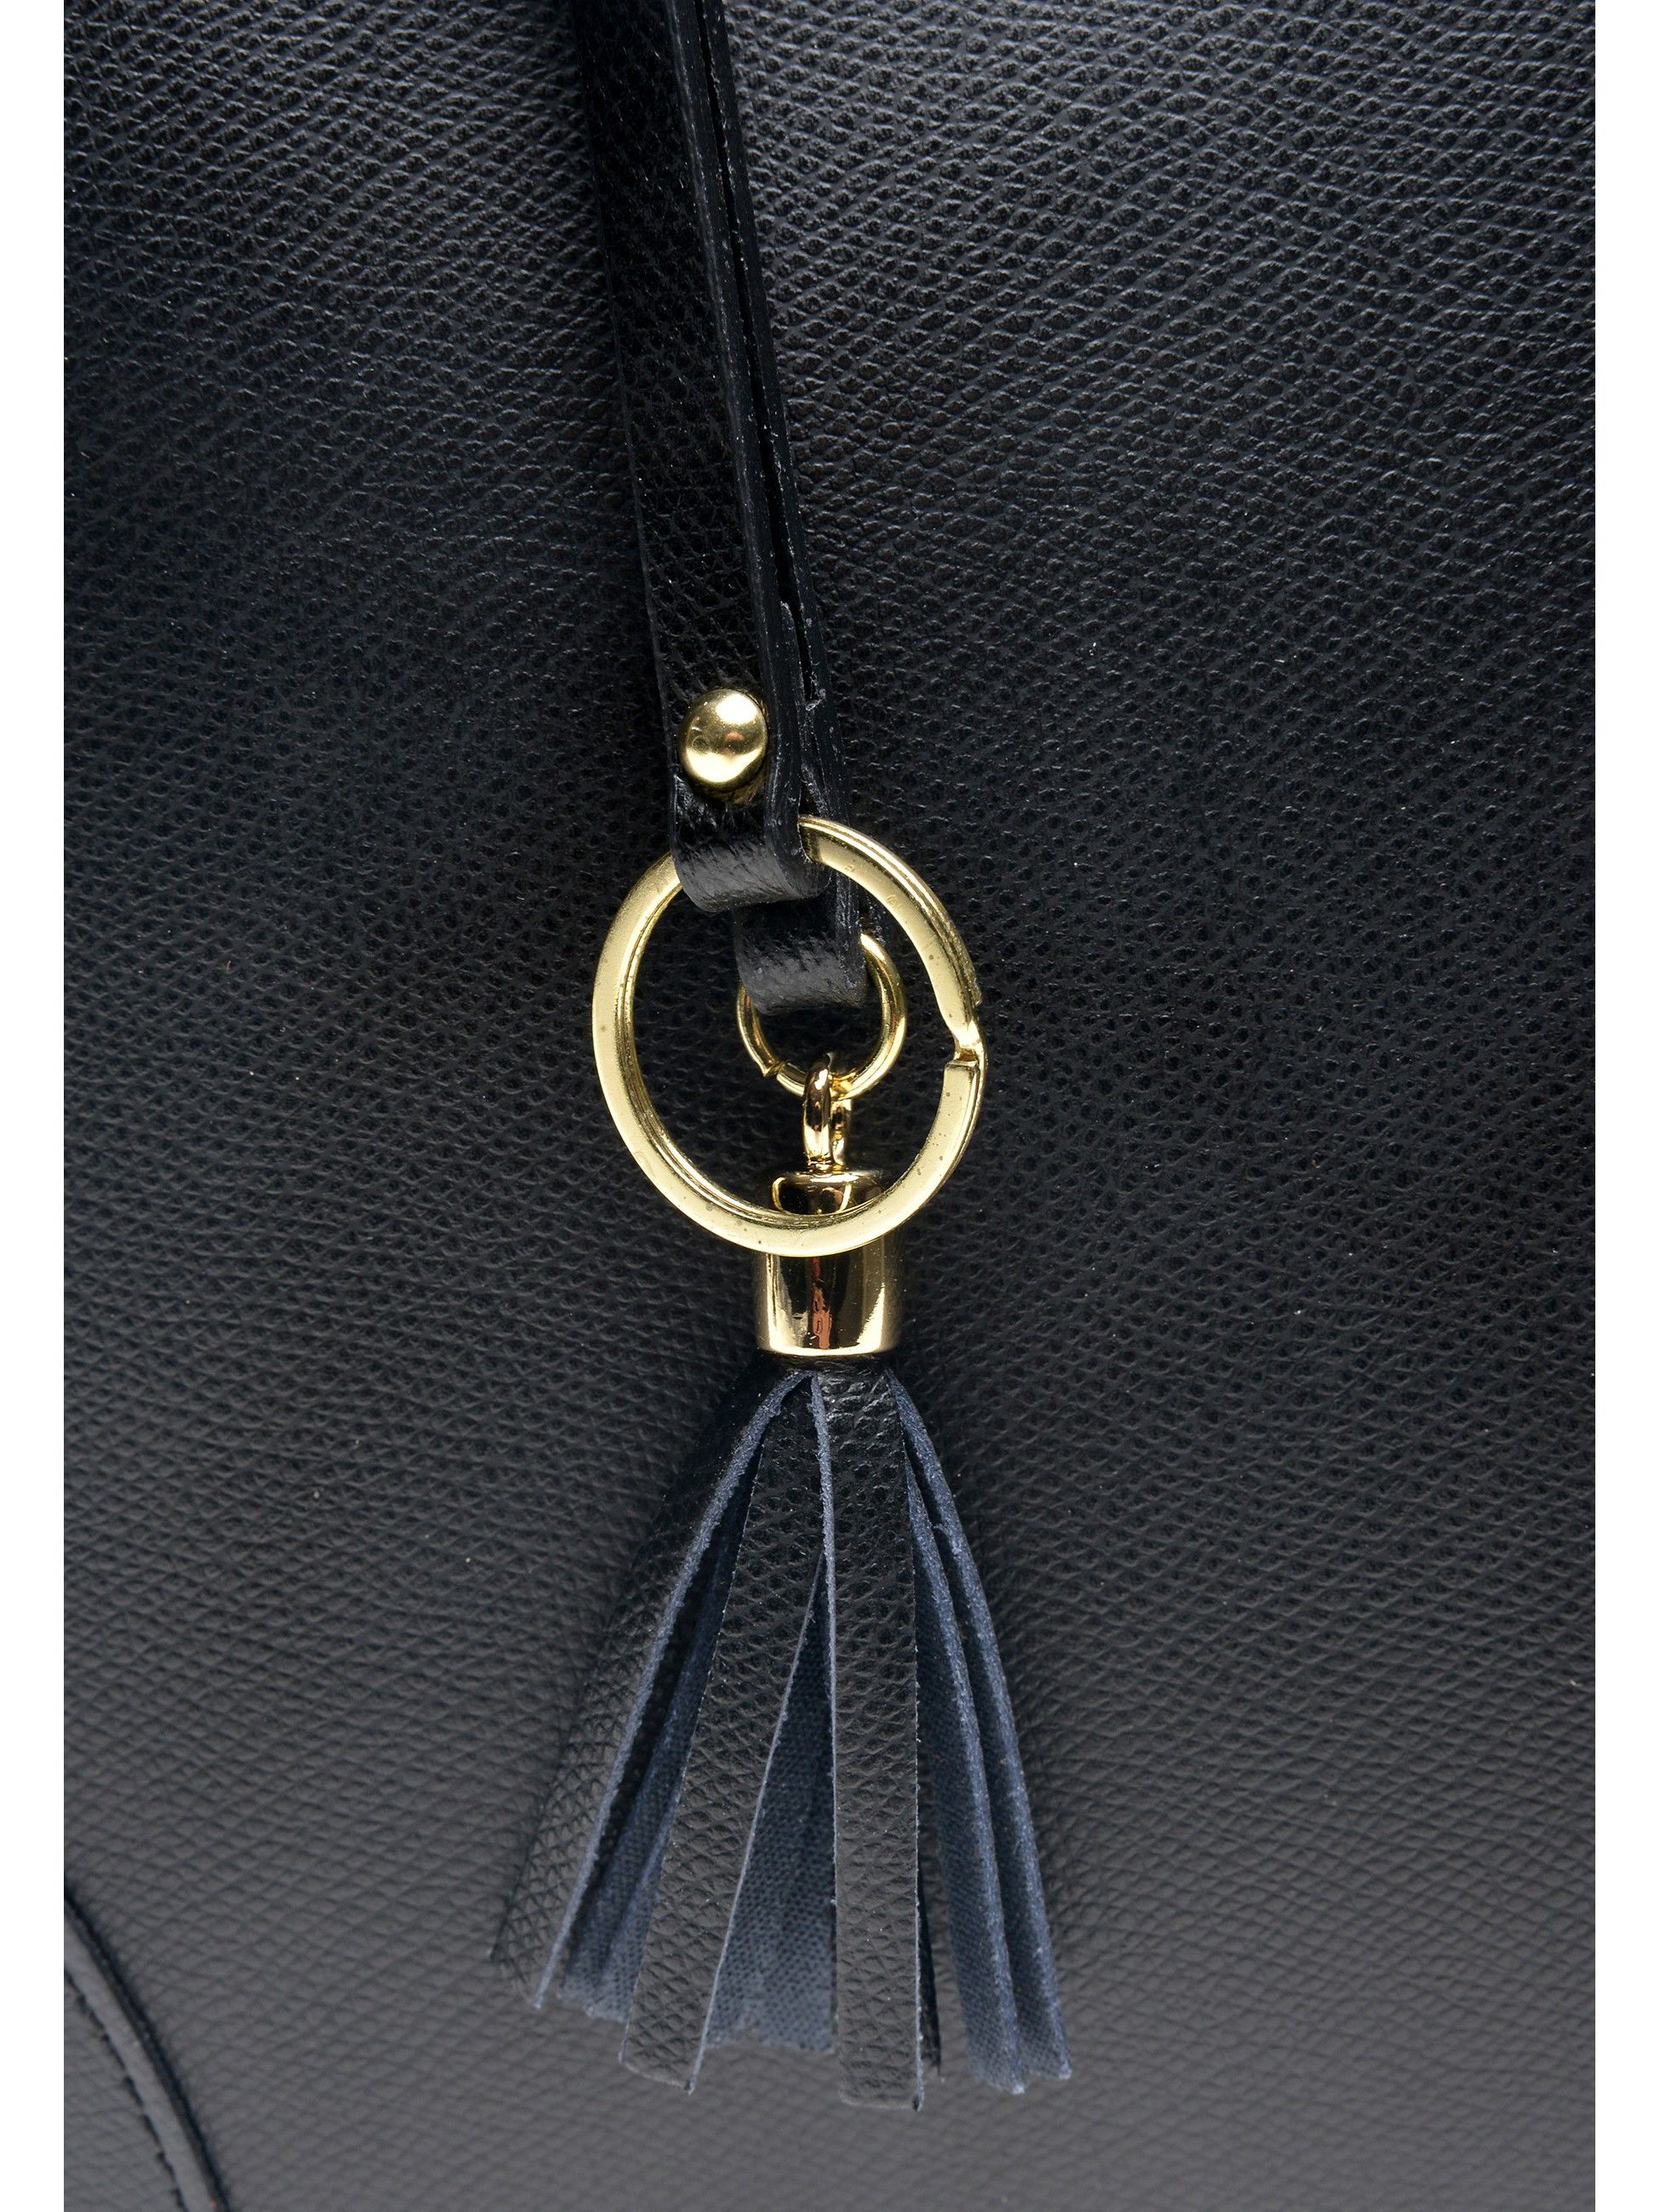 Top Handle Bag
100% cow leather
Two top handles: 36 cm 
Interior zip organizing pocket
Tassel accent on front
Detachable shoulder strap
Dimensions: 23.5x36x12 cm